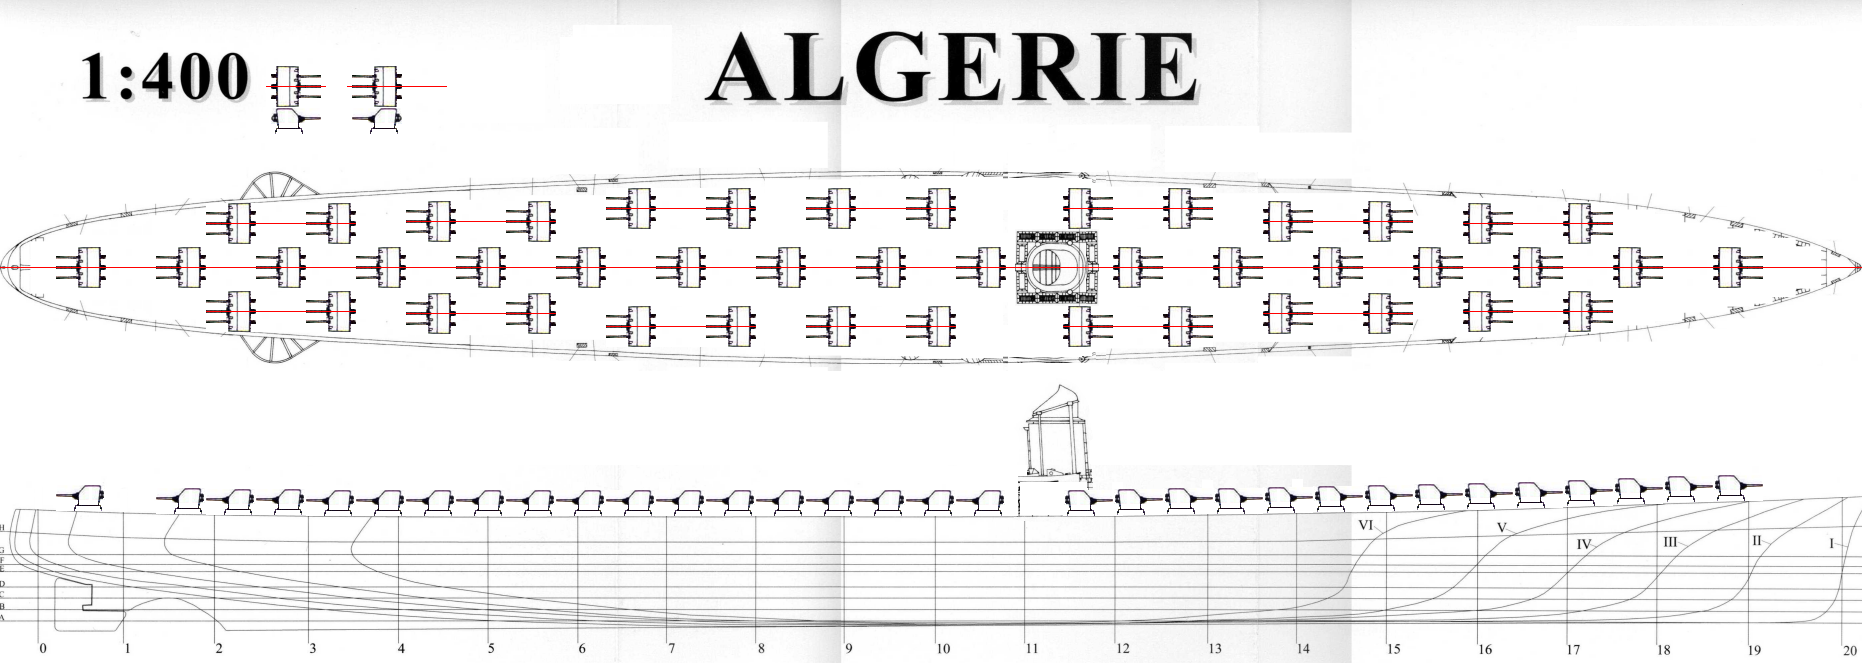 Algerie plot.png